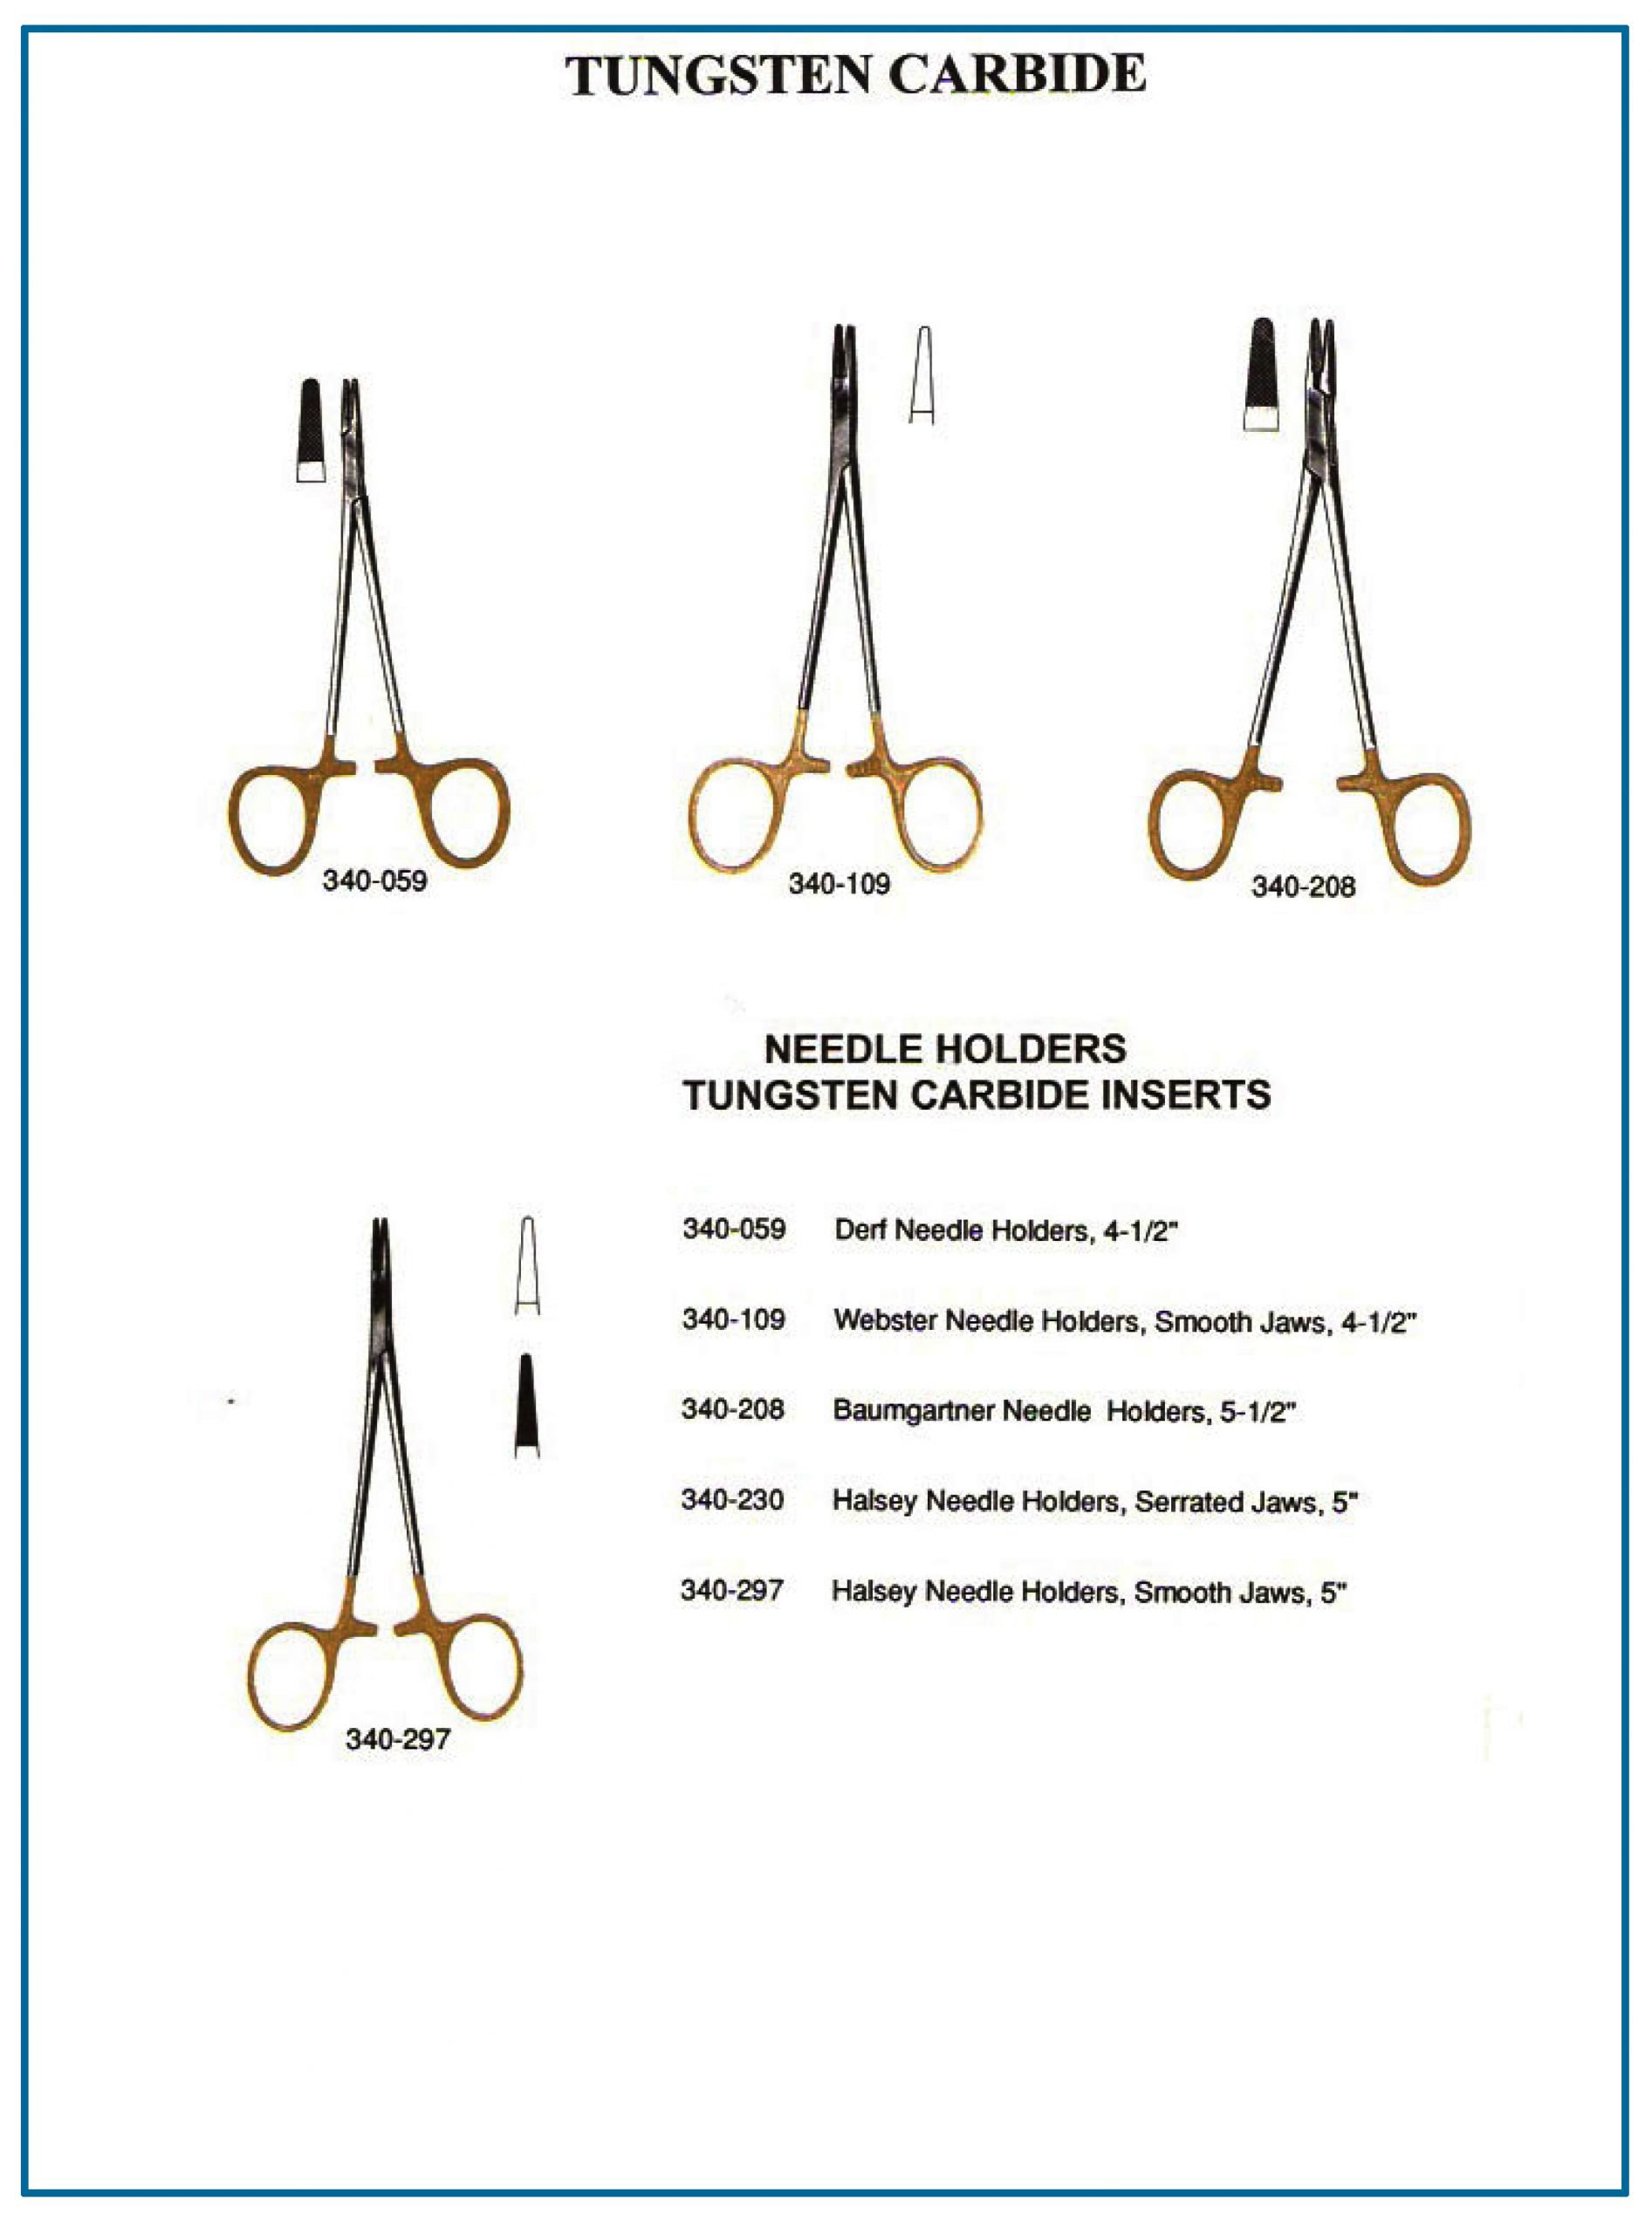 Baumgartner Needle Holders